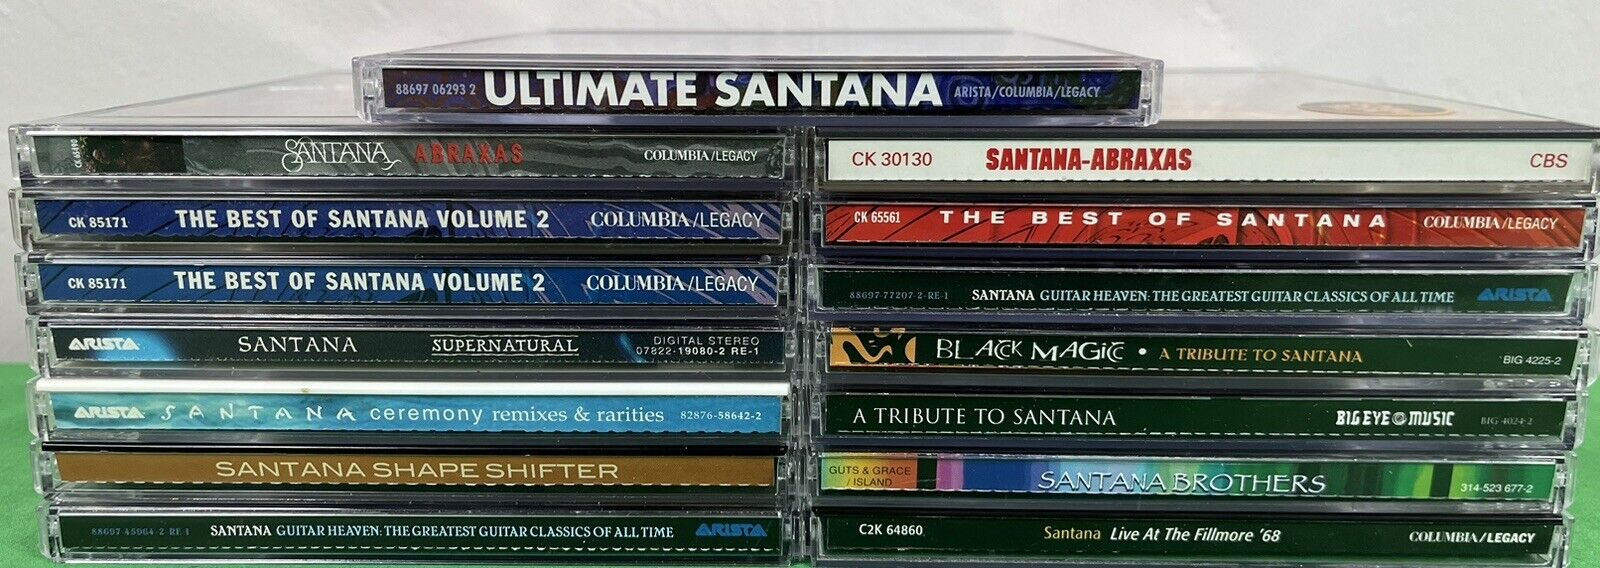 Lot of 15 Carlos Santana CDs Best, Ultimate, Abraxas, Tribute , Ceremony, Live +